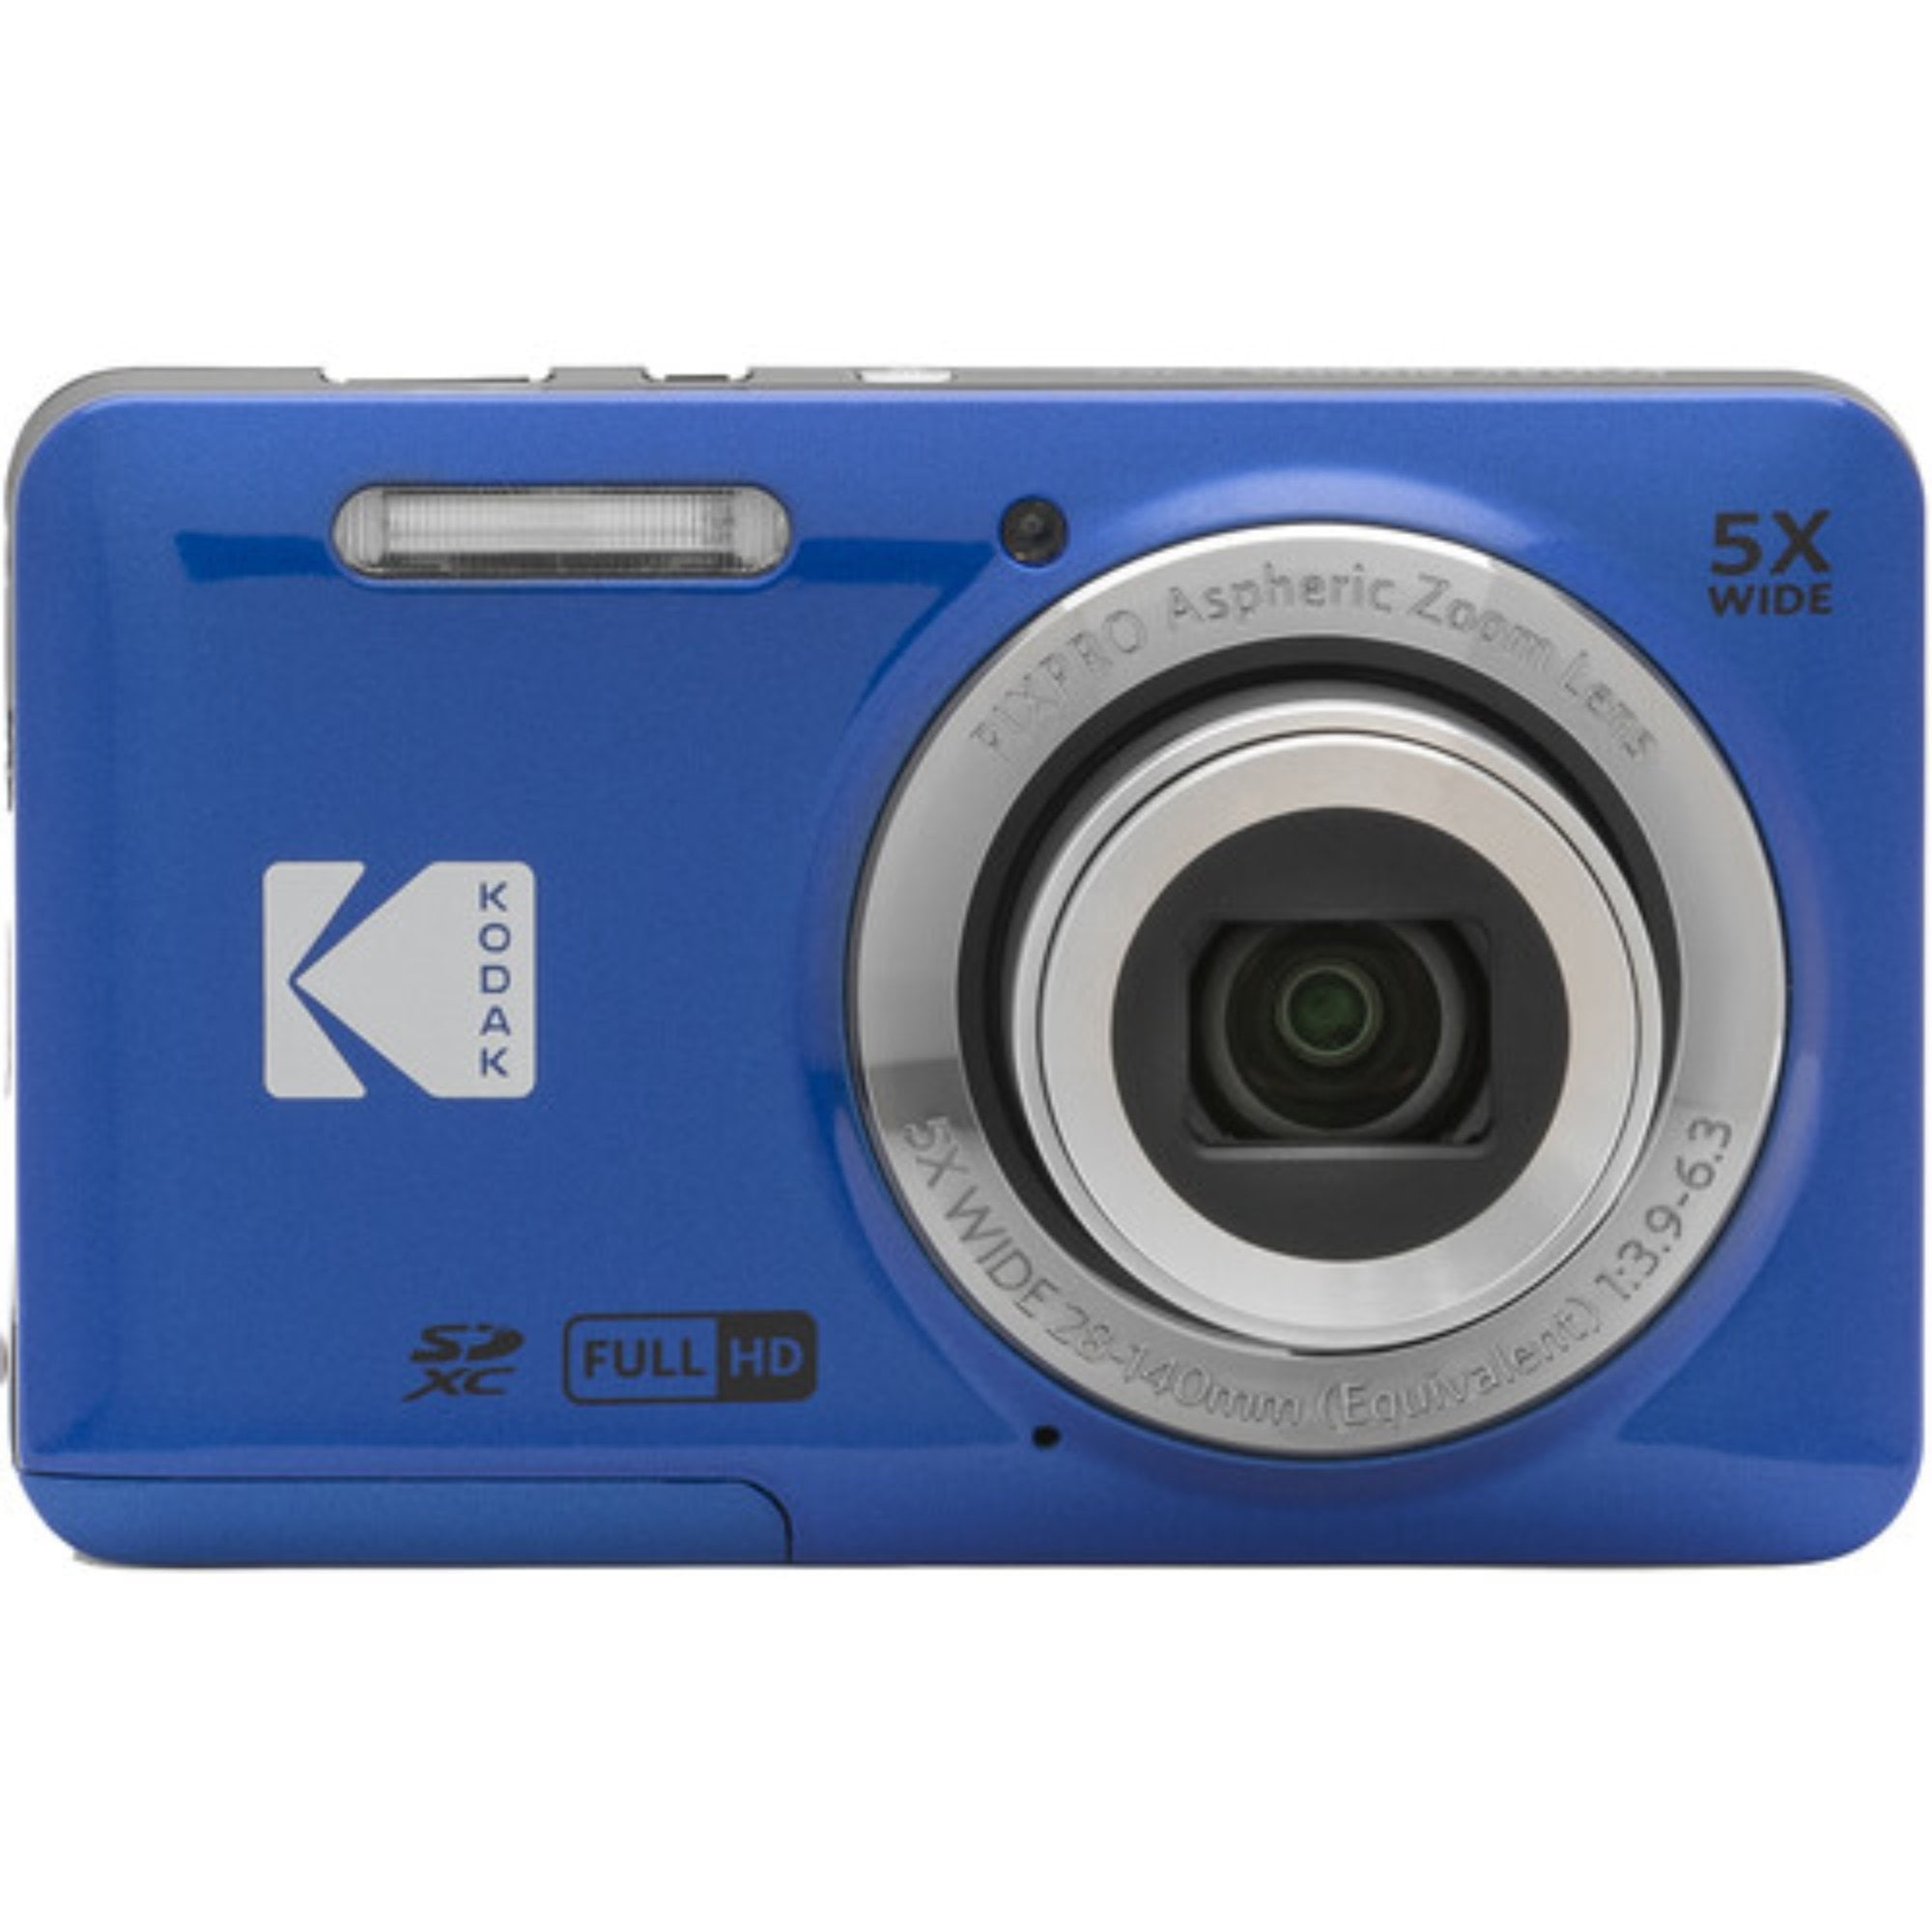 Appareil photo compact Kodak Pixpro FZ55 Bleu - Appareil photo